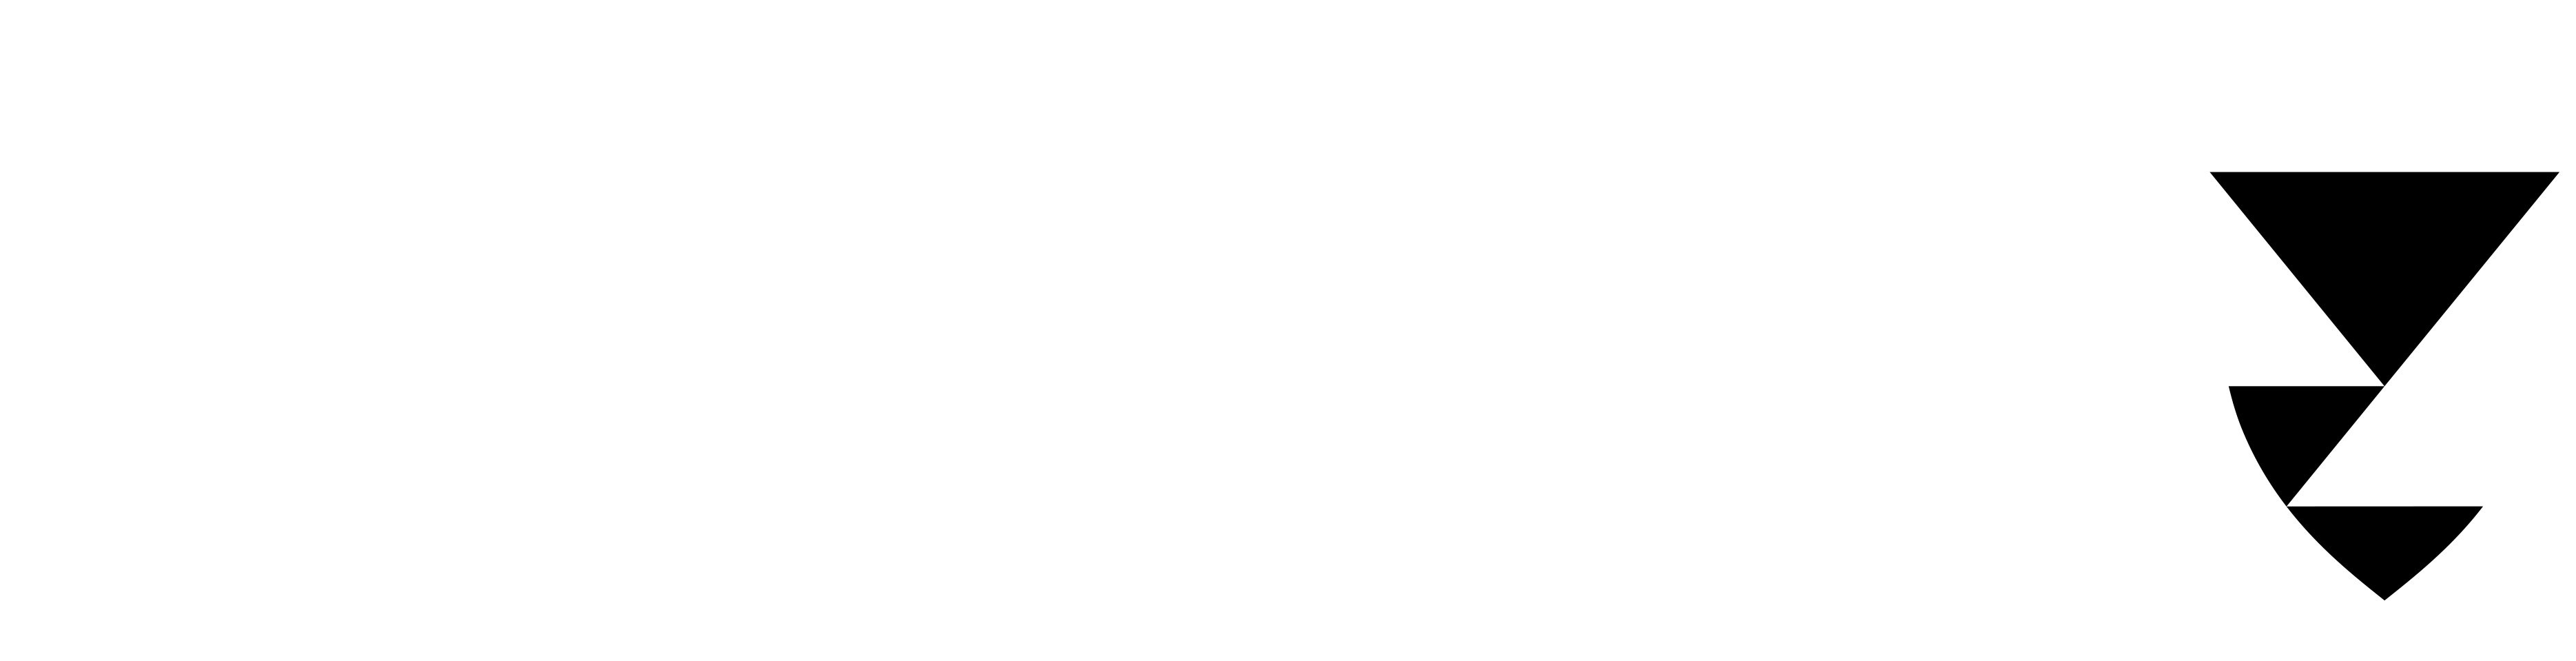 Skyss logo